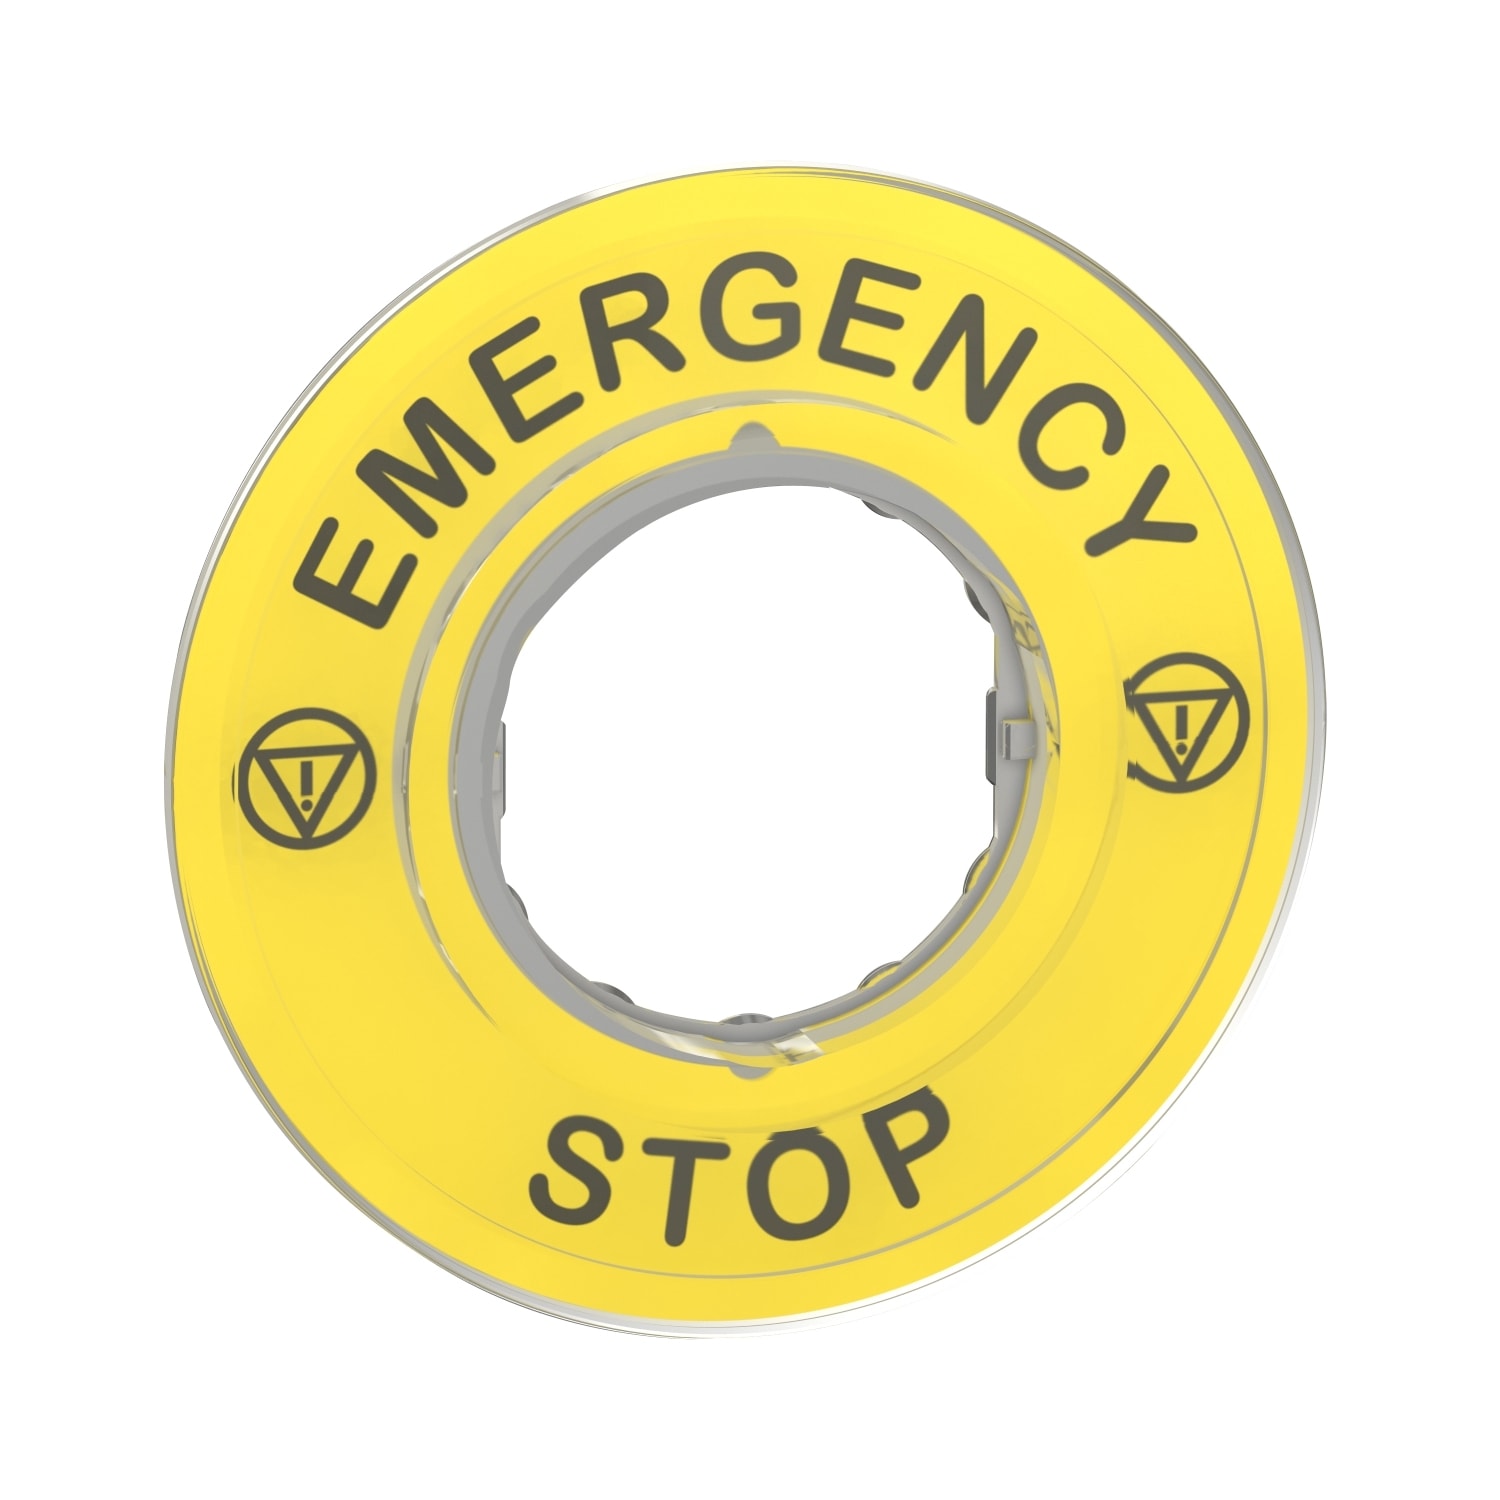 Schneider Electric - Harmony - etiquette circulaire jaune 3D - D60 - Emergency Stop